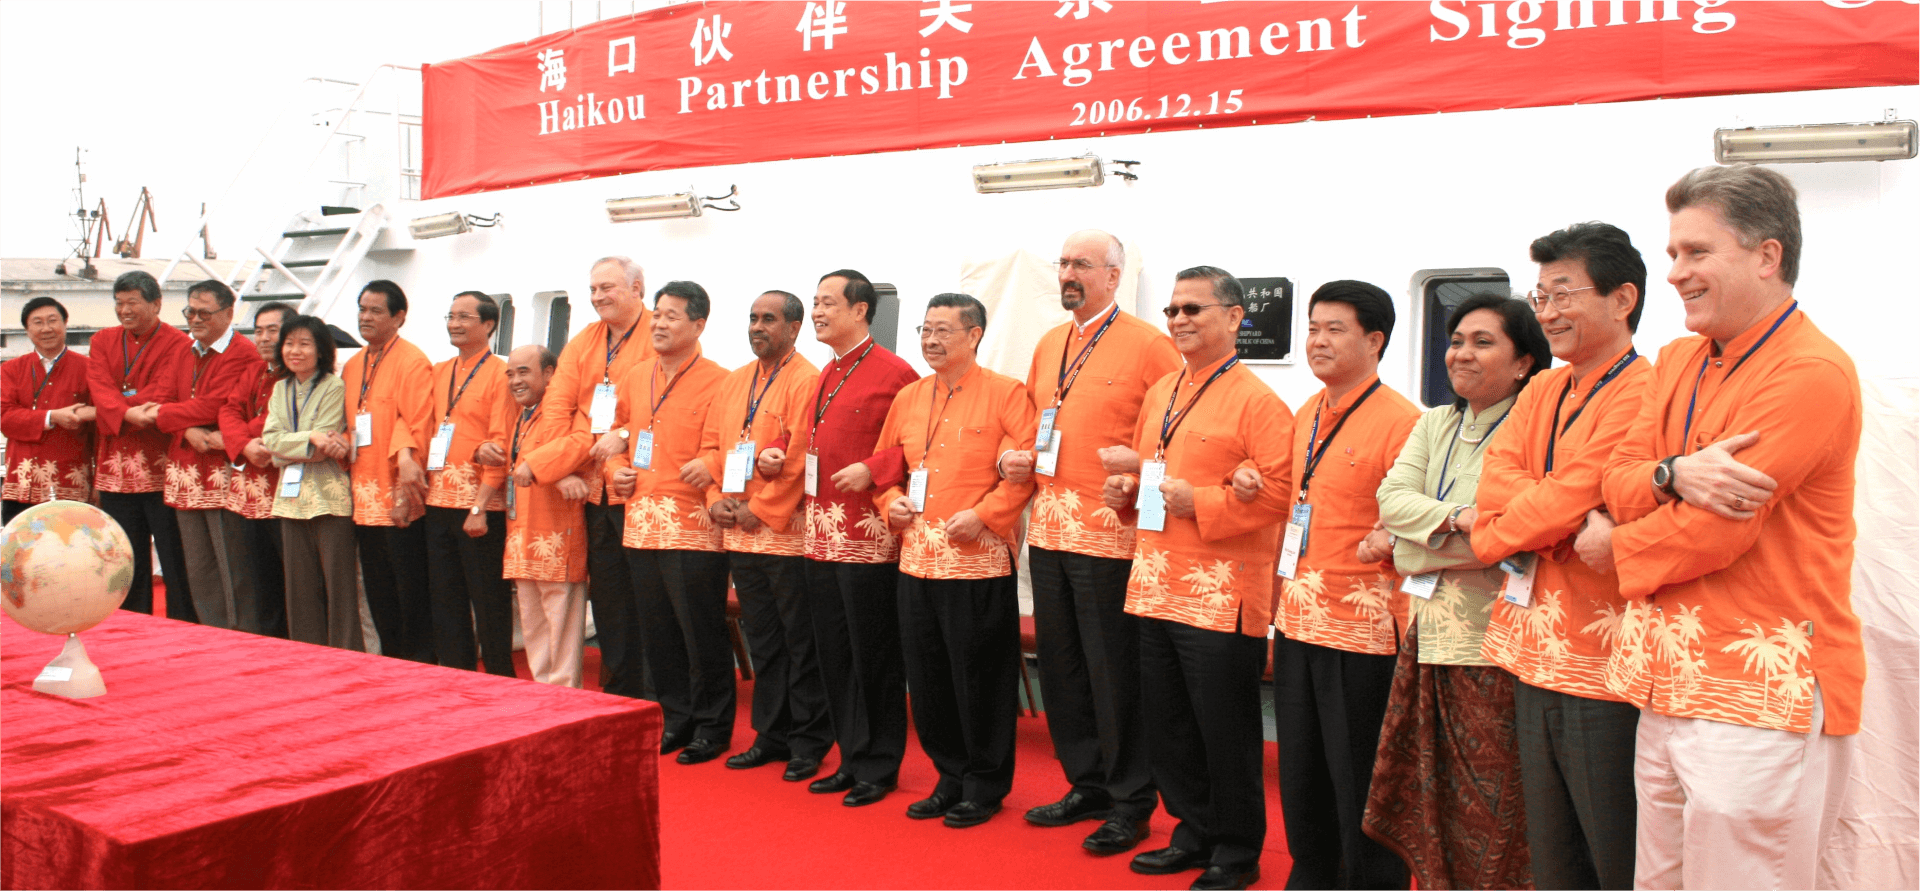 East Asian Partnership Council